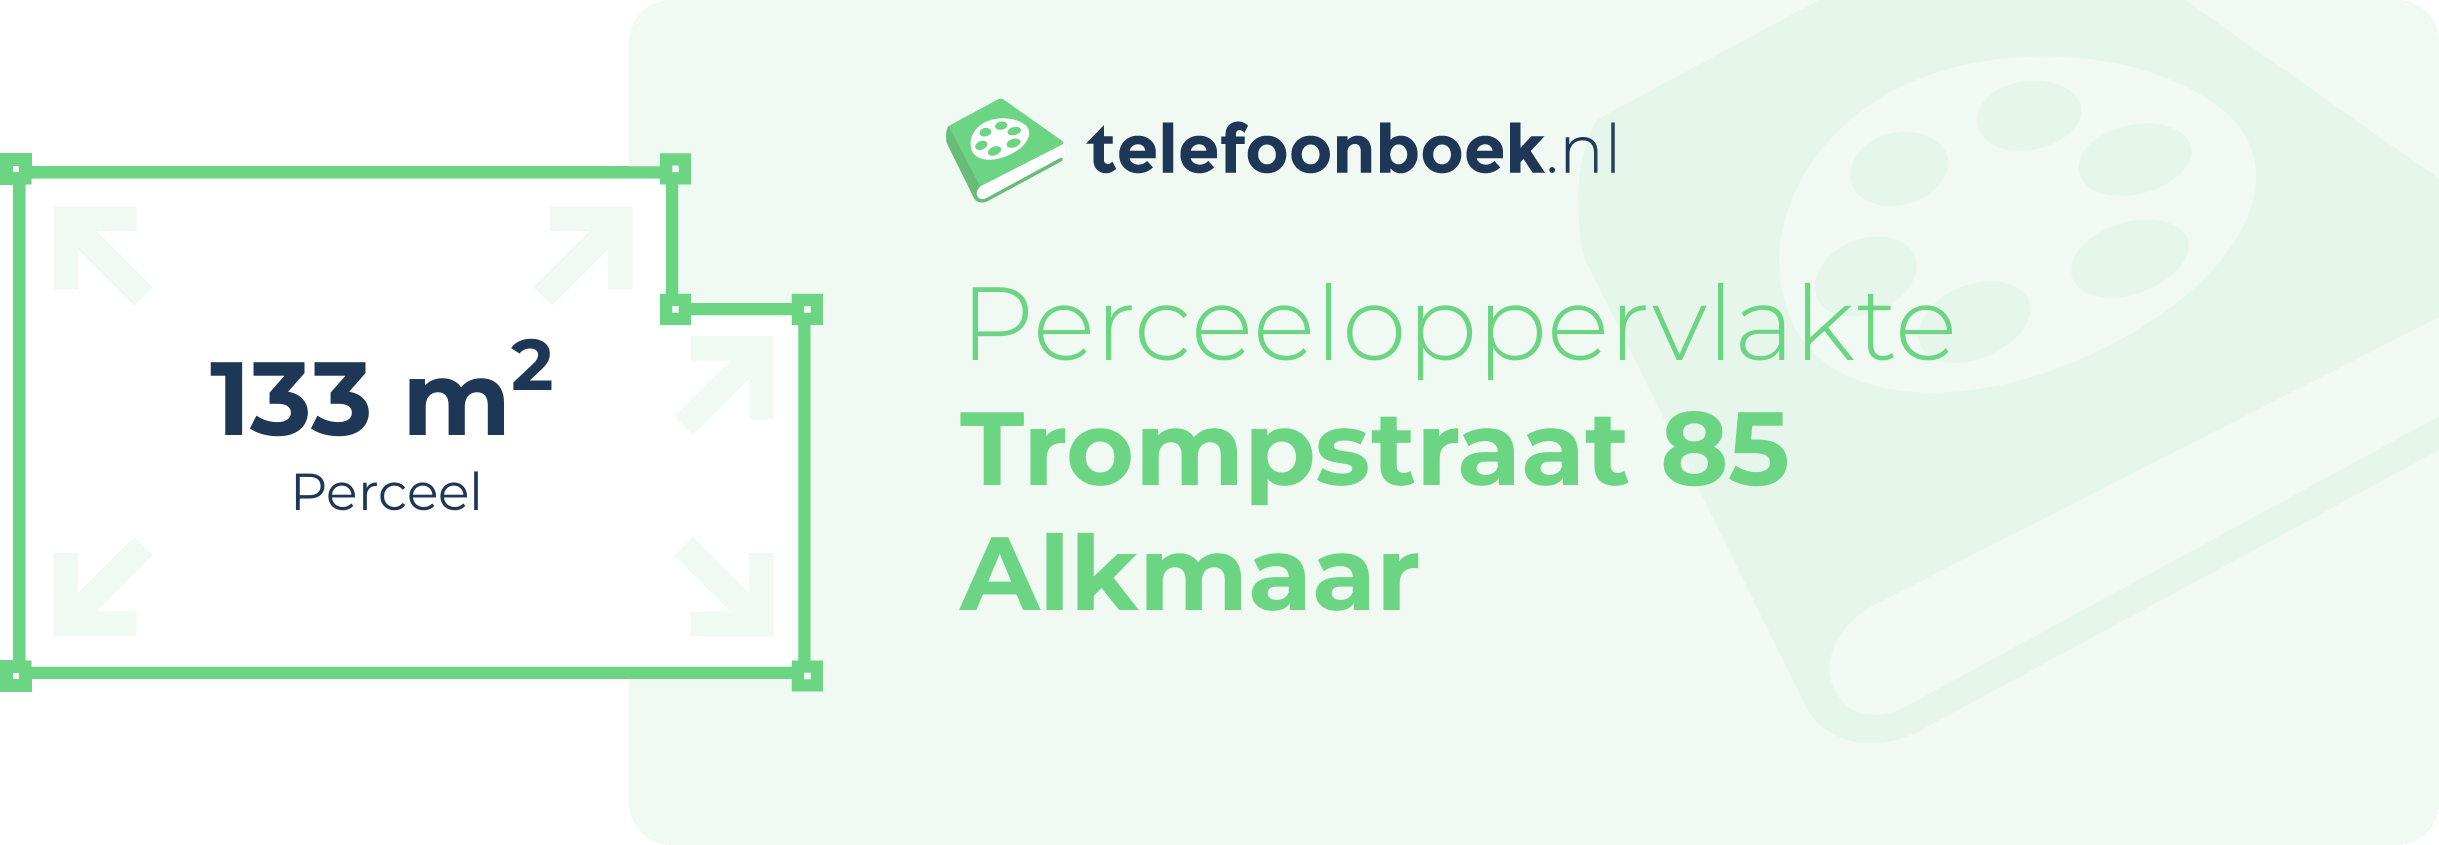 Perceeloppervlakte Trompstraat 85 Alkmaar